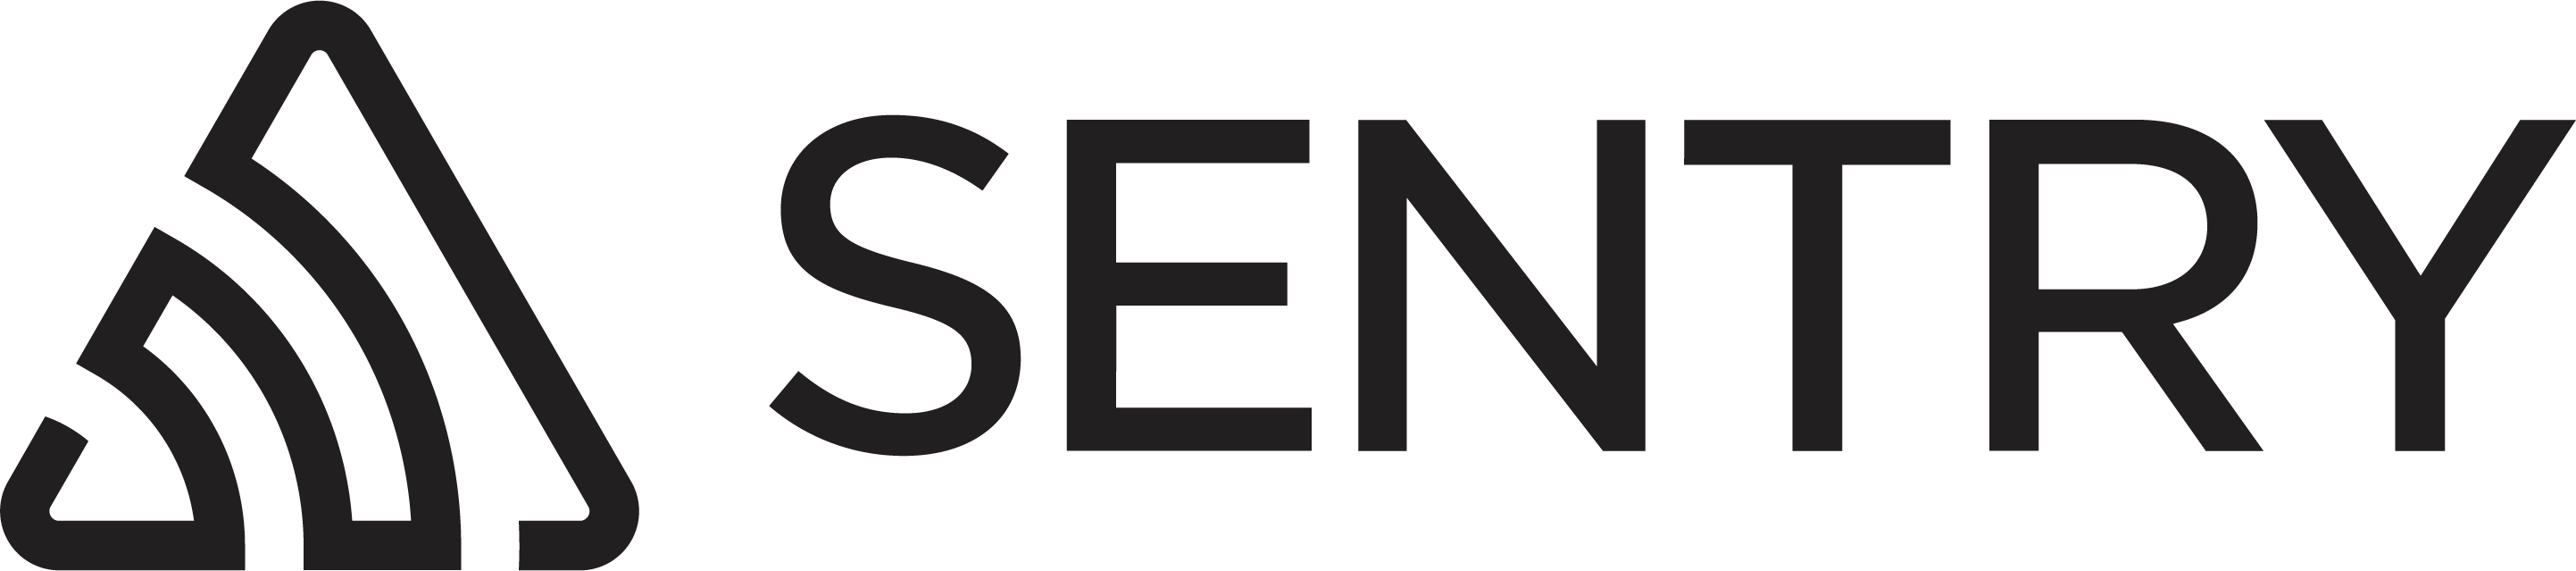 Sentry Logo png